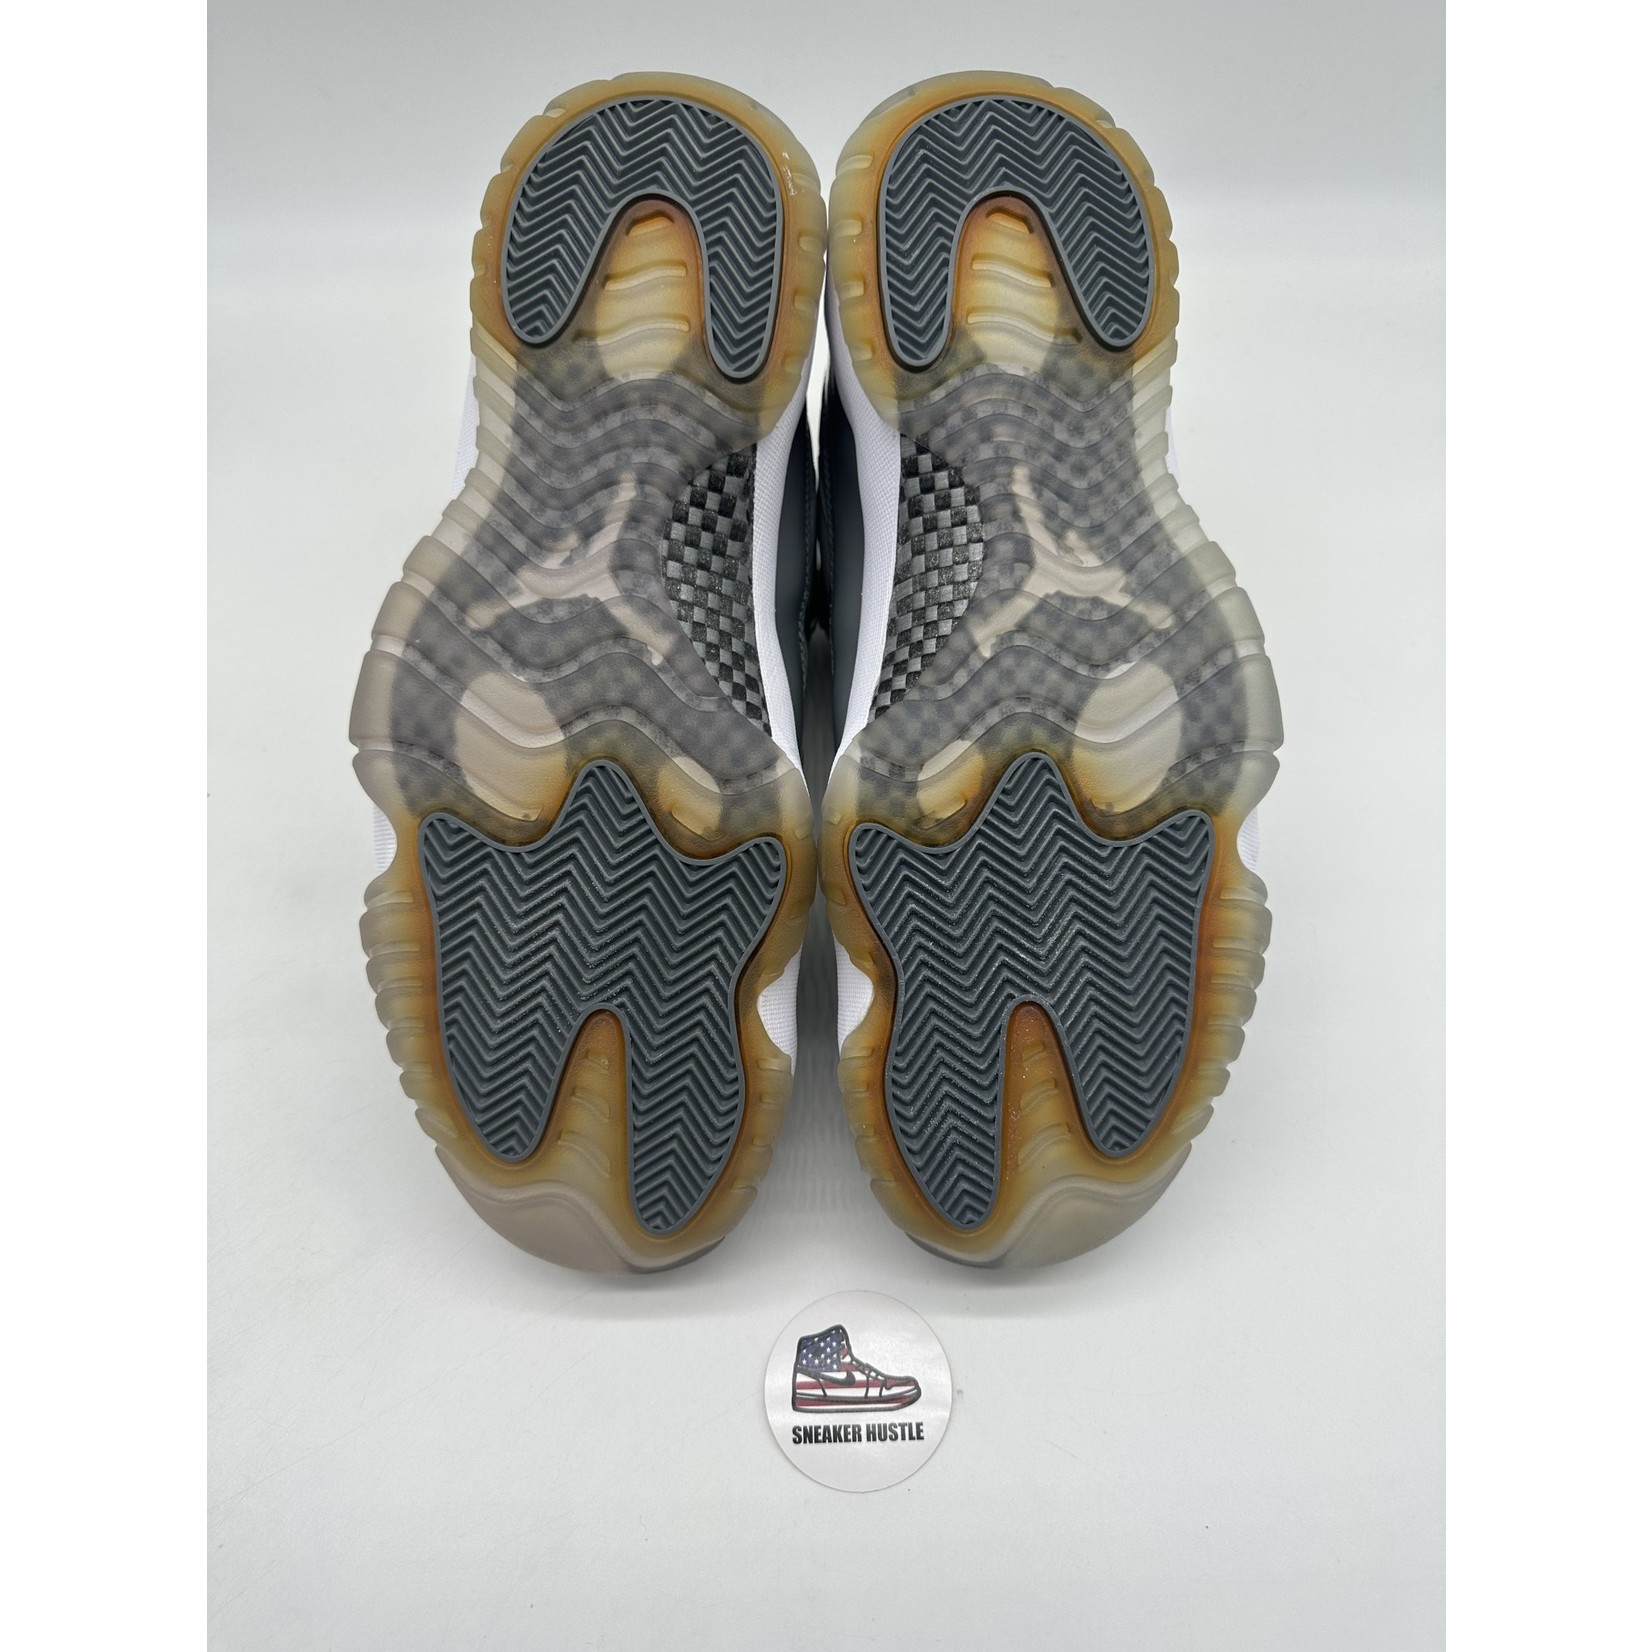 Jordan 11 Retro Cool Grey (2010) - Sneaker Hustle